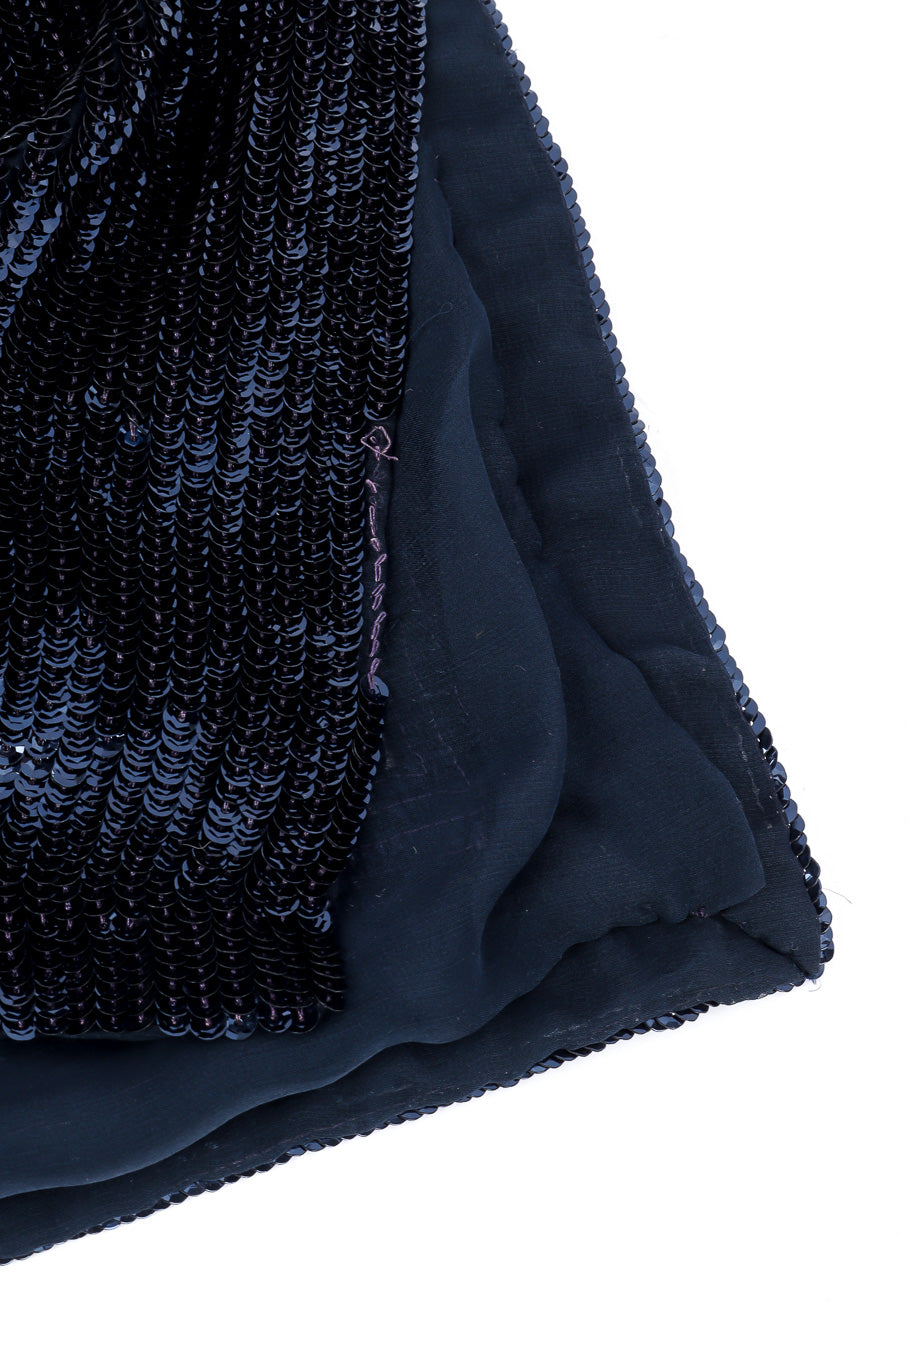 Midnight sequin skirt by Gianfranco Ferre missing sequins at hem  @recessla